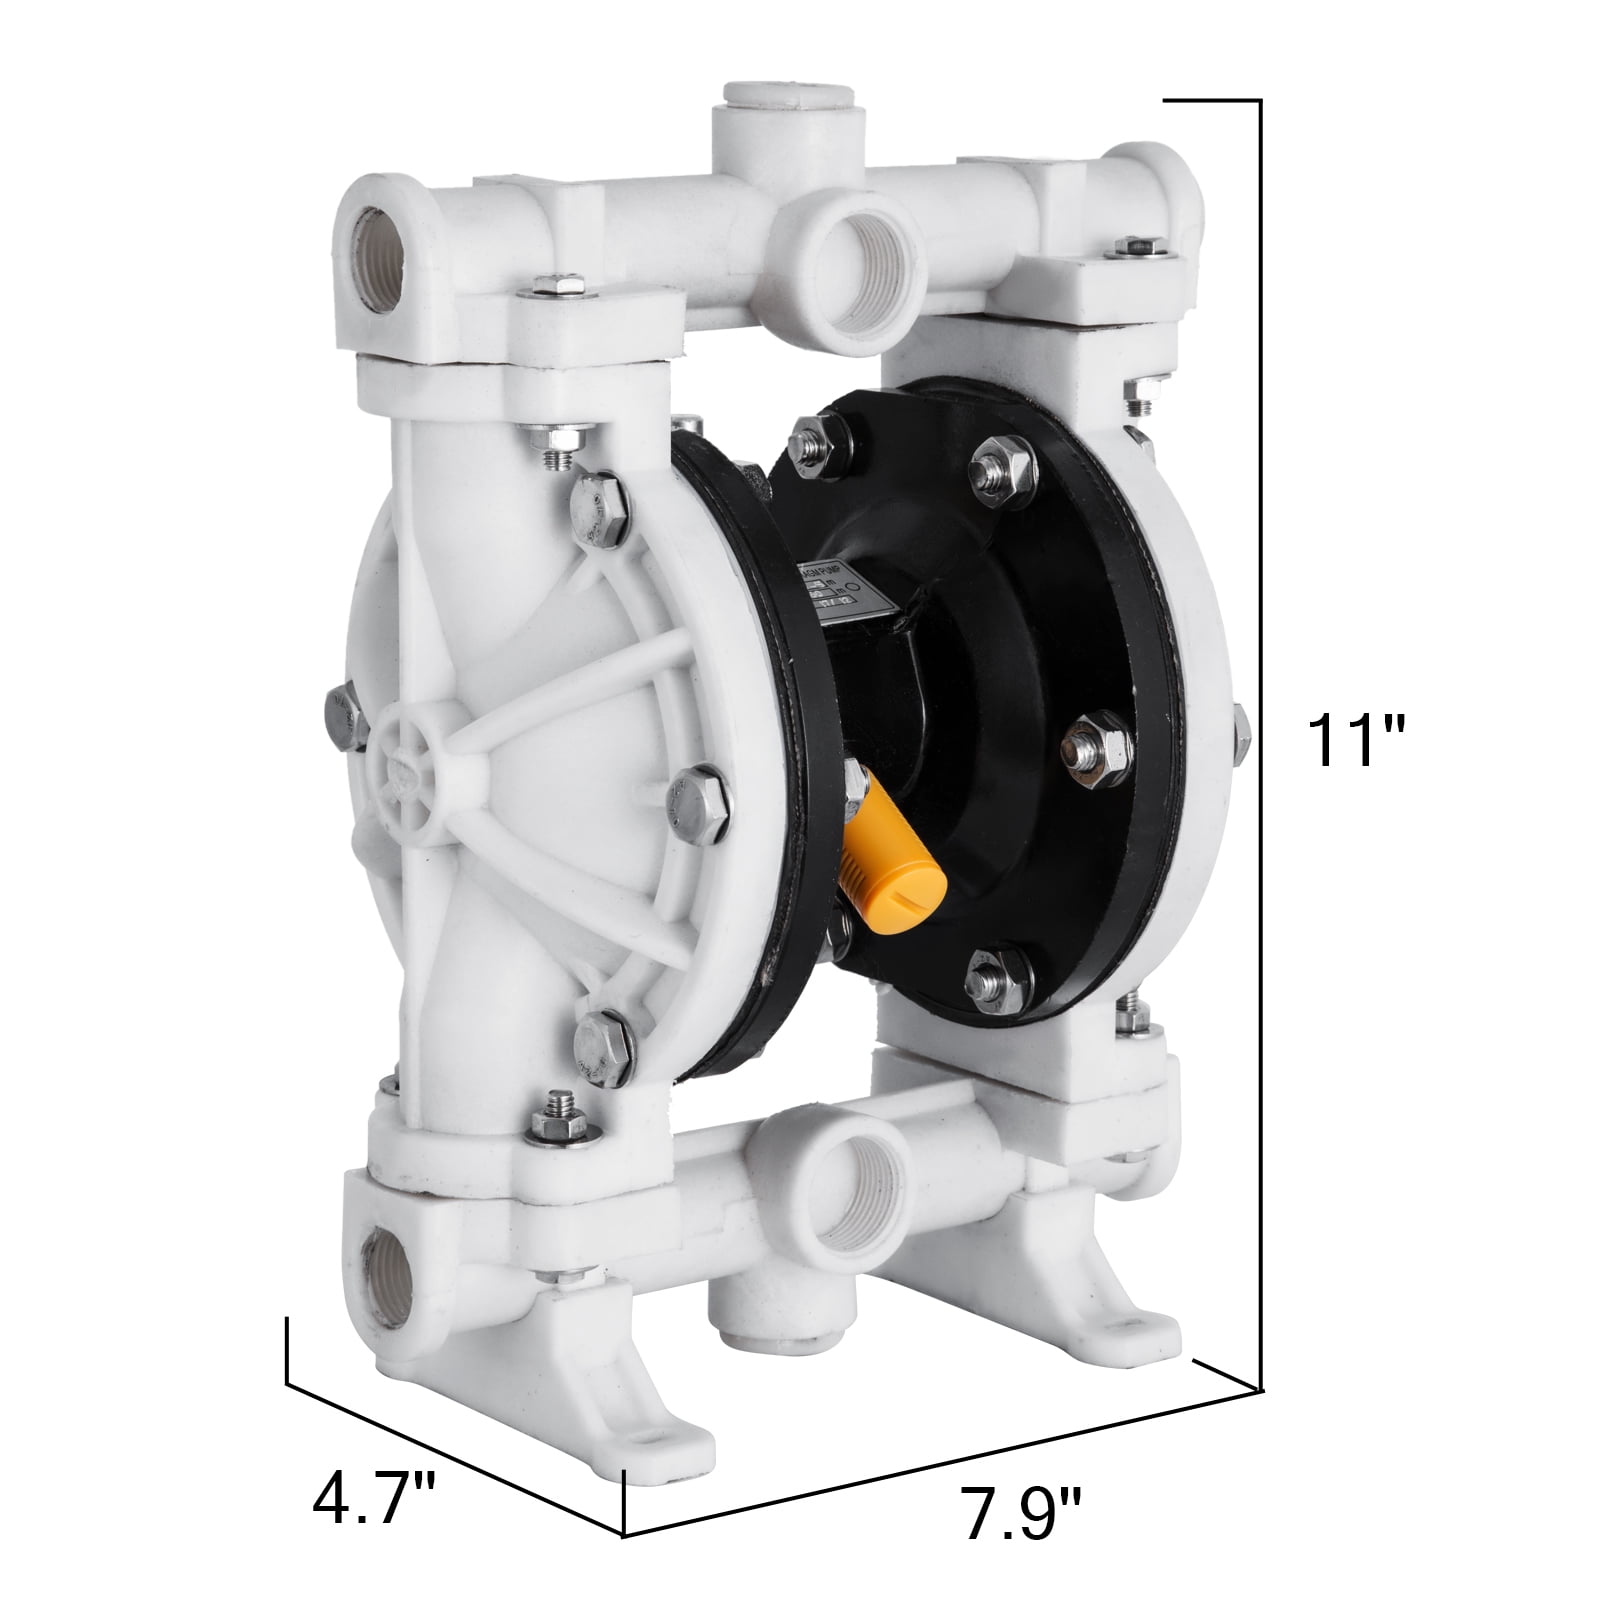 QBY-15PP Air-Operated Diaphragm Pump 1/2 Inch Inlet and Outlet Double Diaphragm Air Pump Double Diaphragm Pump 